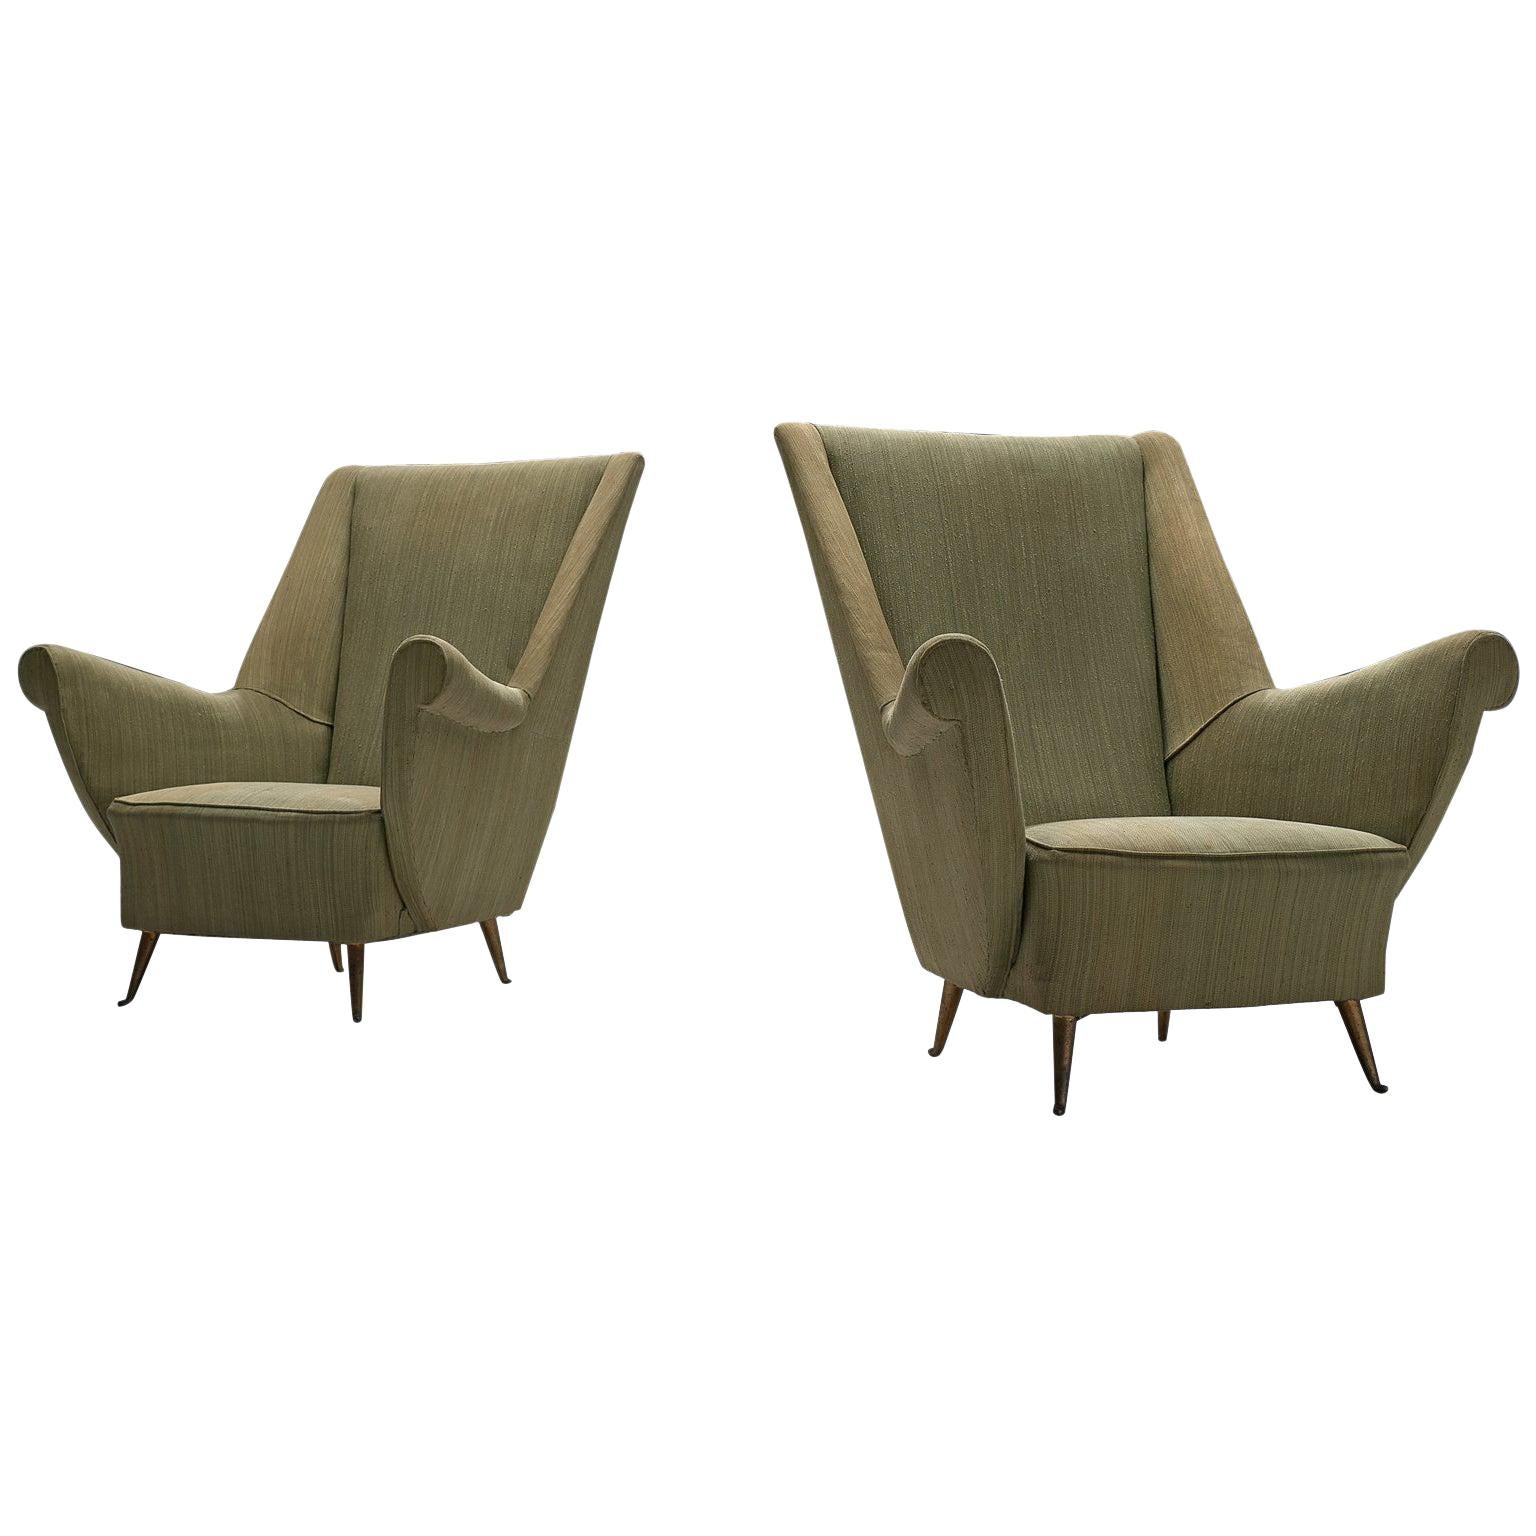 Pair of Elegant Wingback Chairs in Original Green Fabric